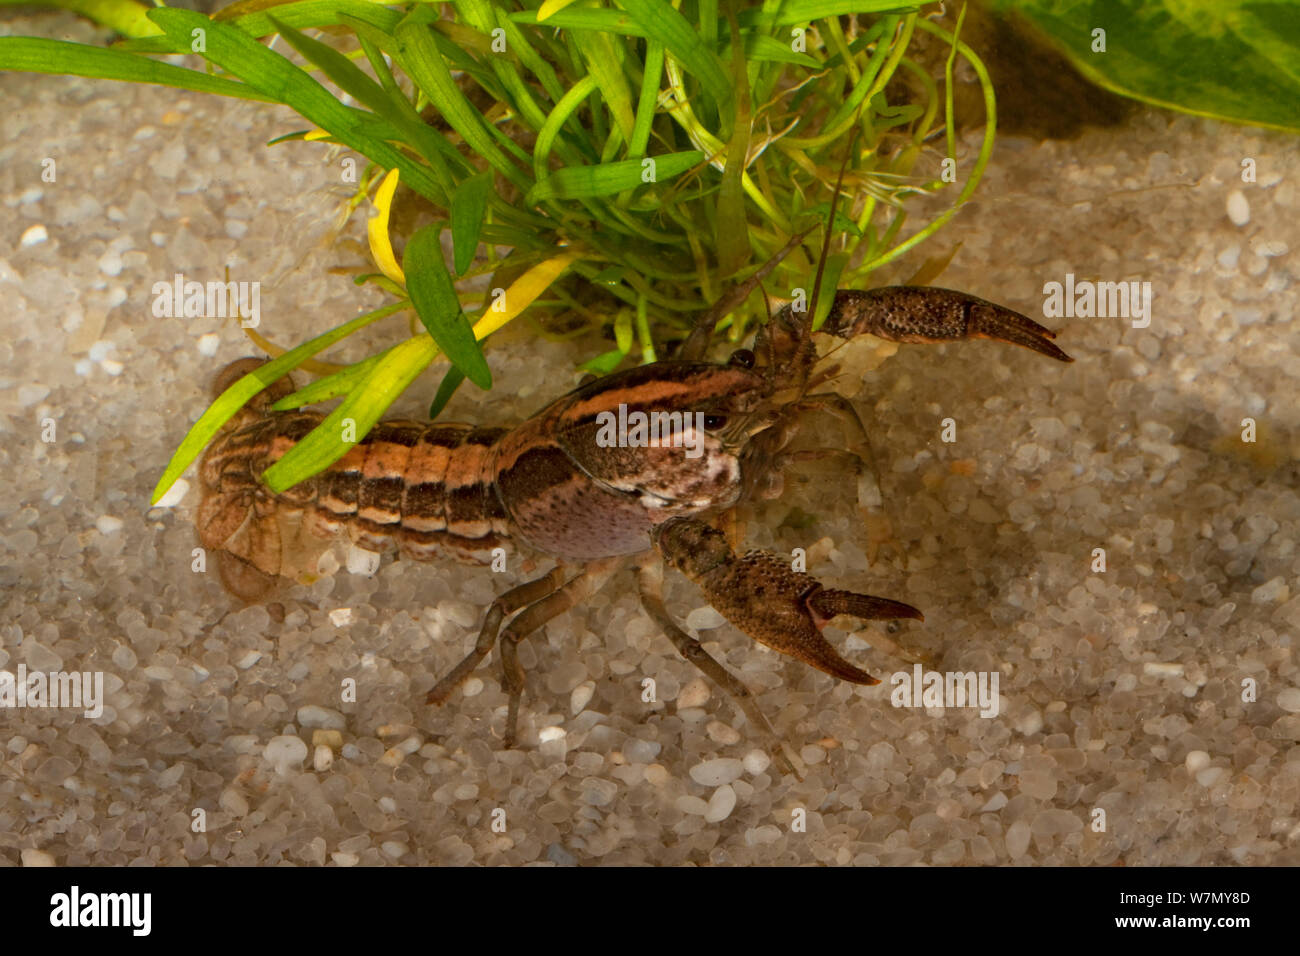 Hatchet crayfish (Procambarus kilbyi) striped phase,  Bay Co, Florida, USA. Controlled conditions Stock Photo